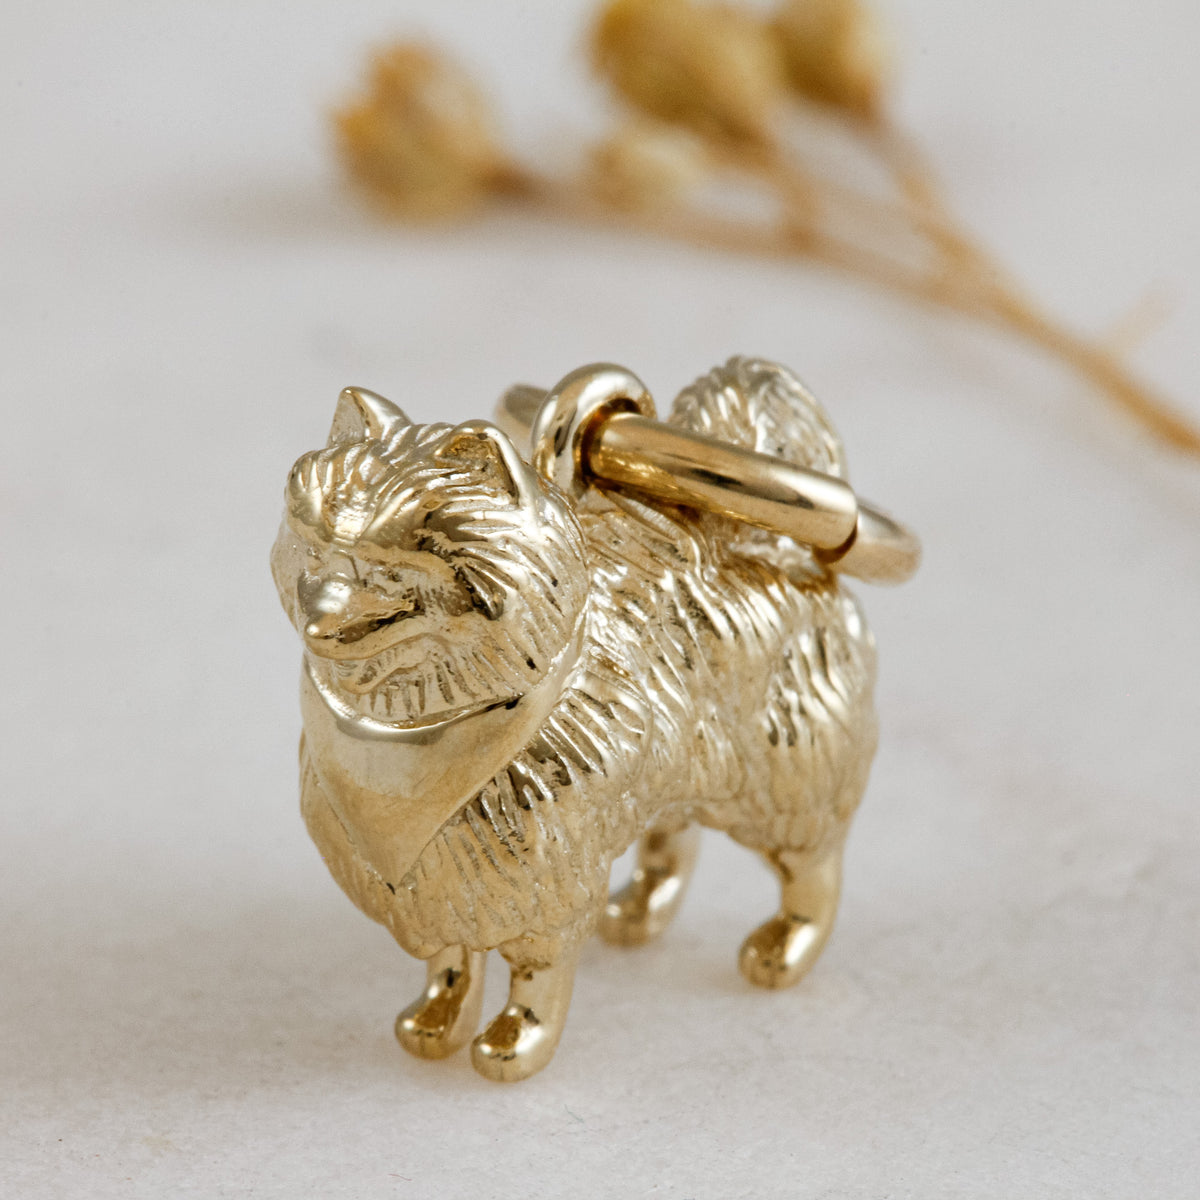 pomeranian solid gold dog charm for a necklace or bracelet